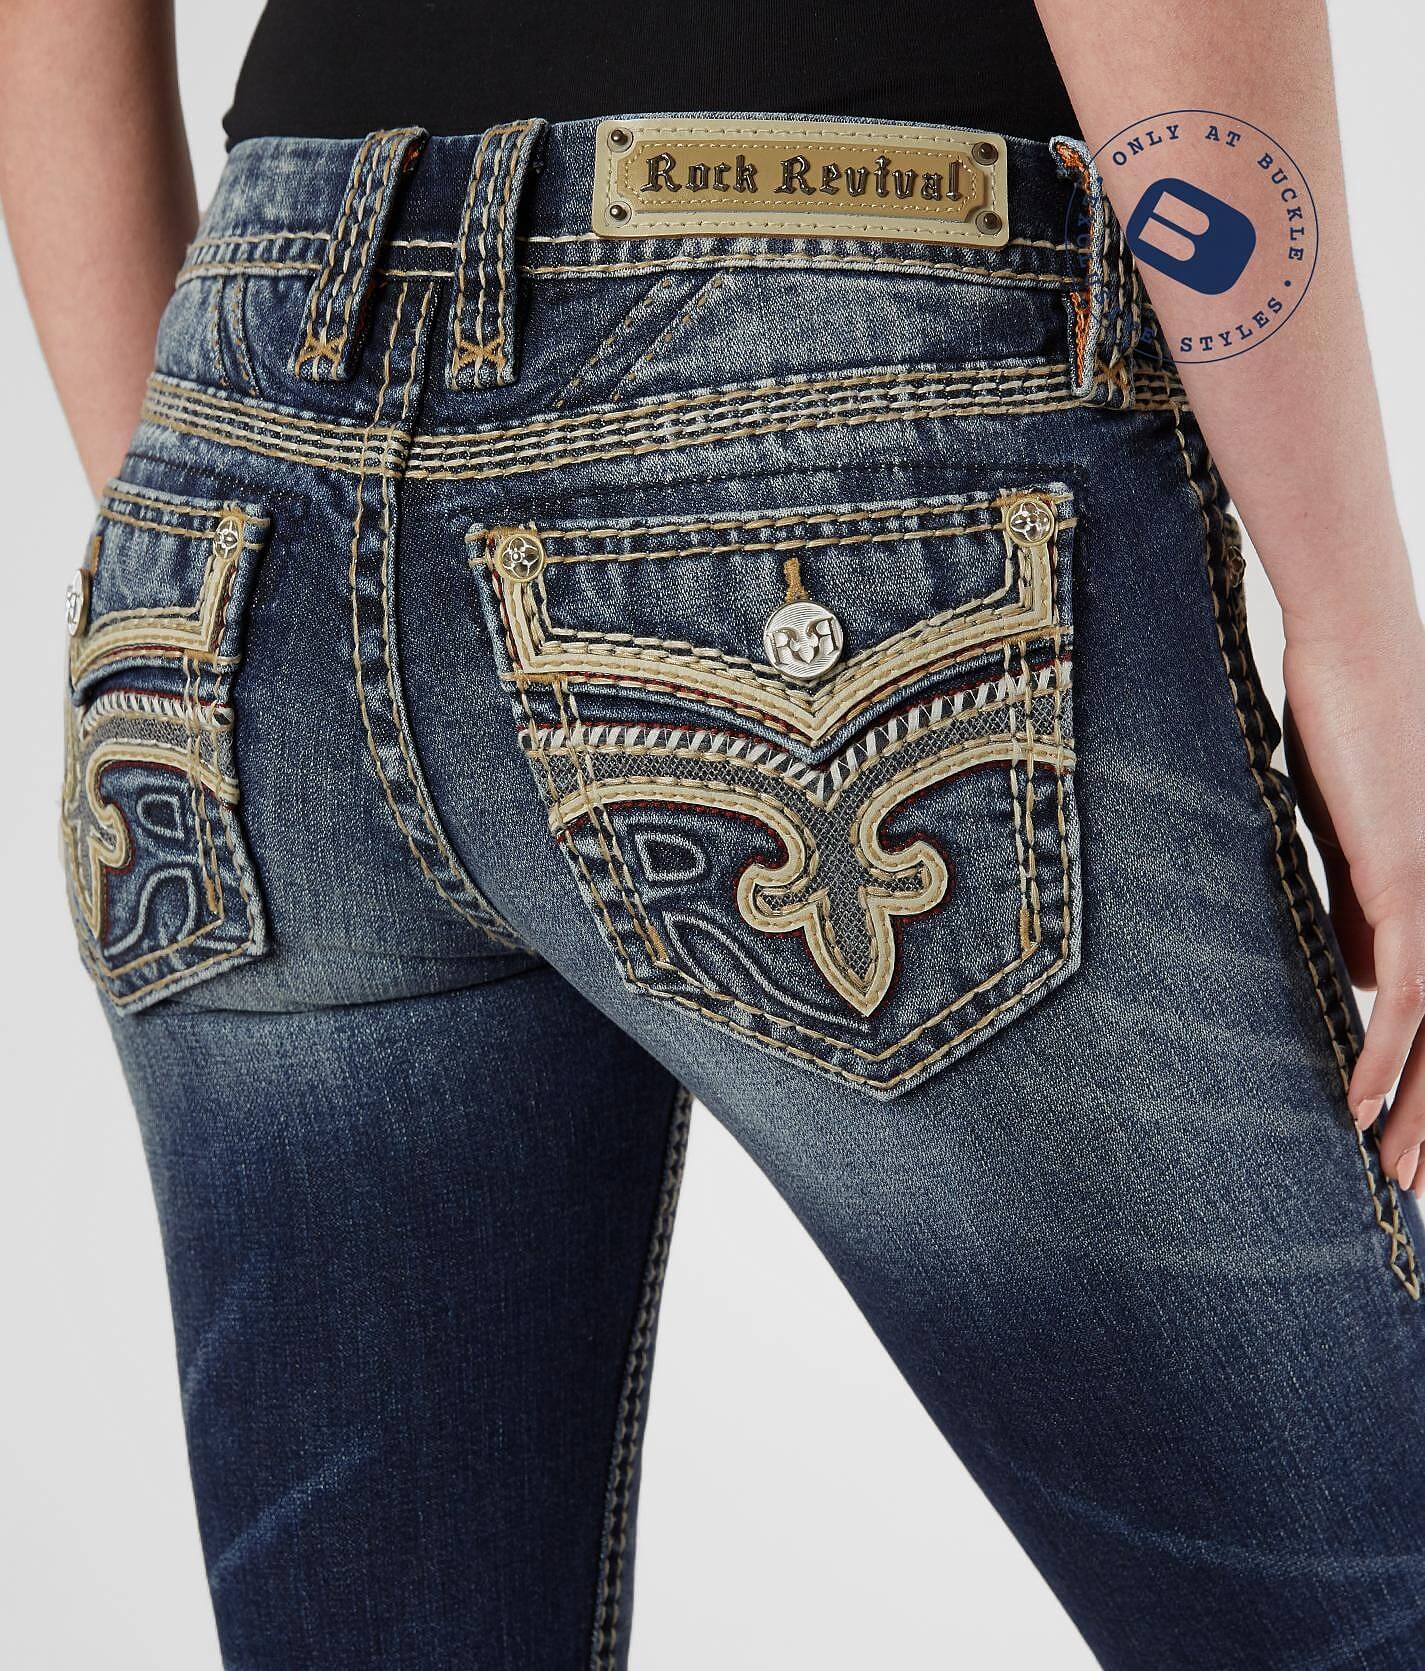 womens rock revival jeans on sale